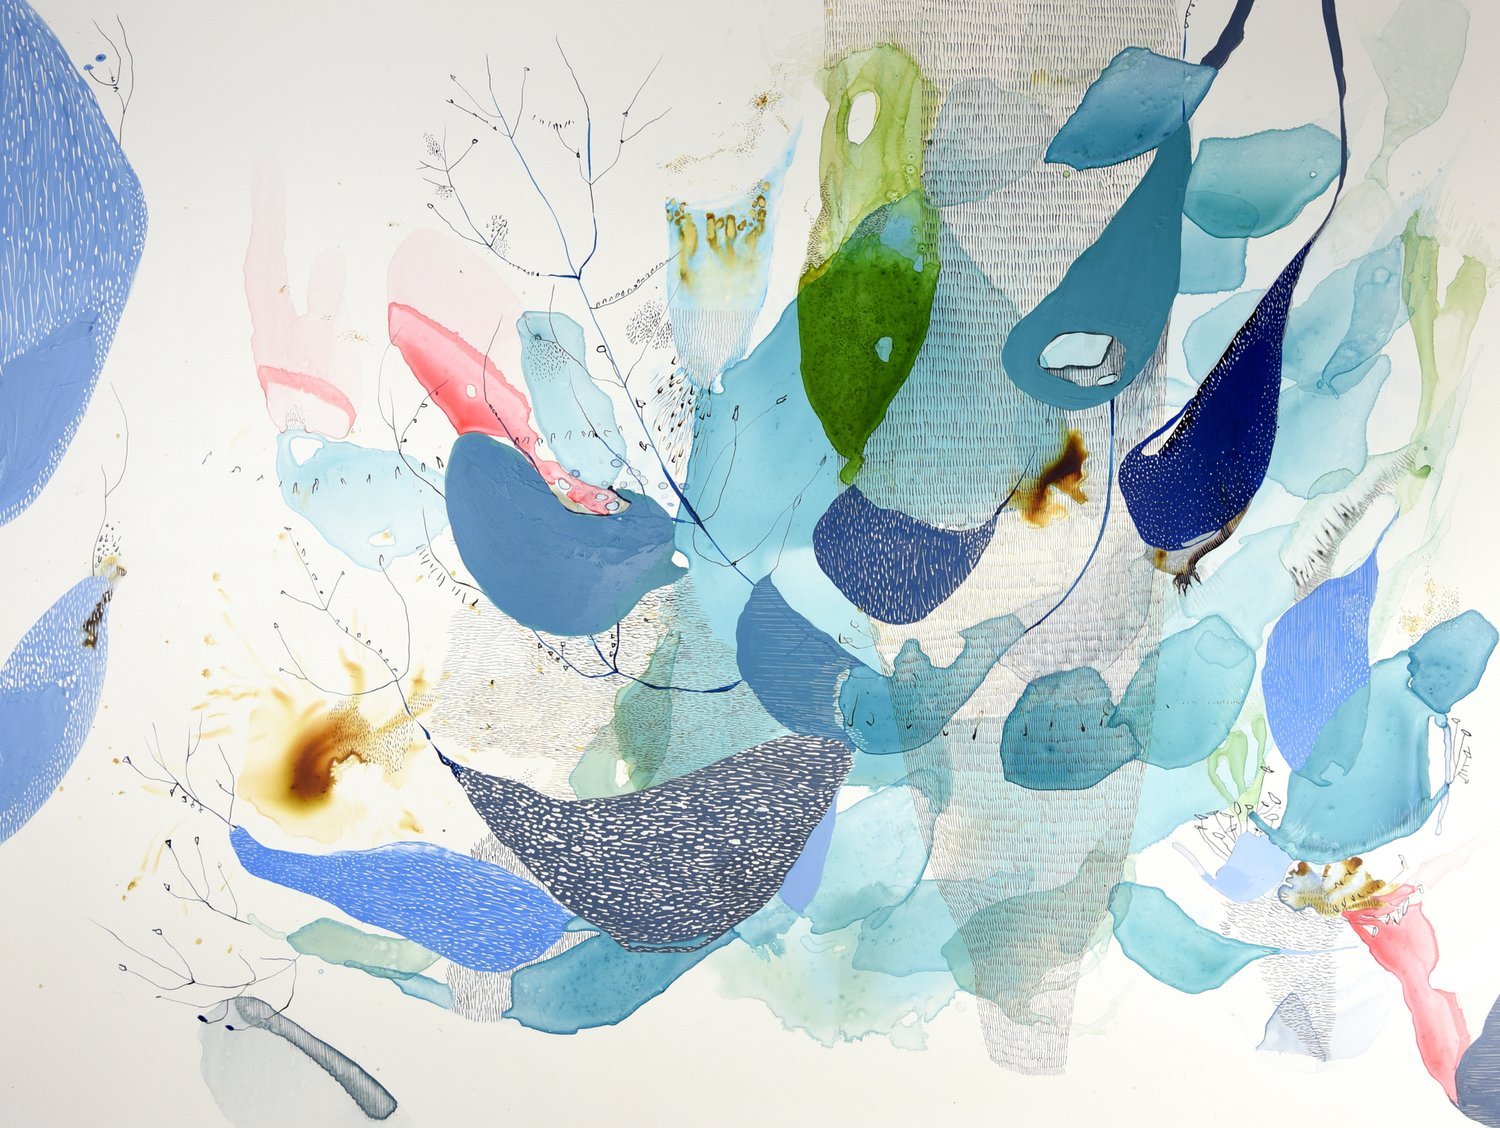   Wondrous Reef W-2022-4-24   watercolor, acrylic and pencil on panel  36x48  $5,500  Ana Zanic 